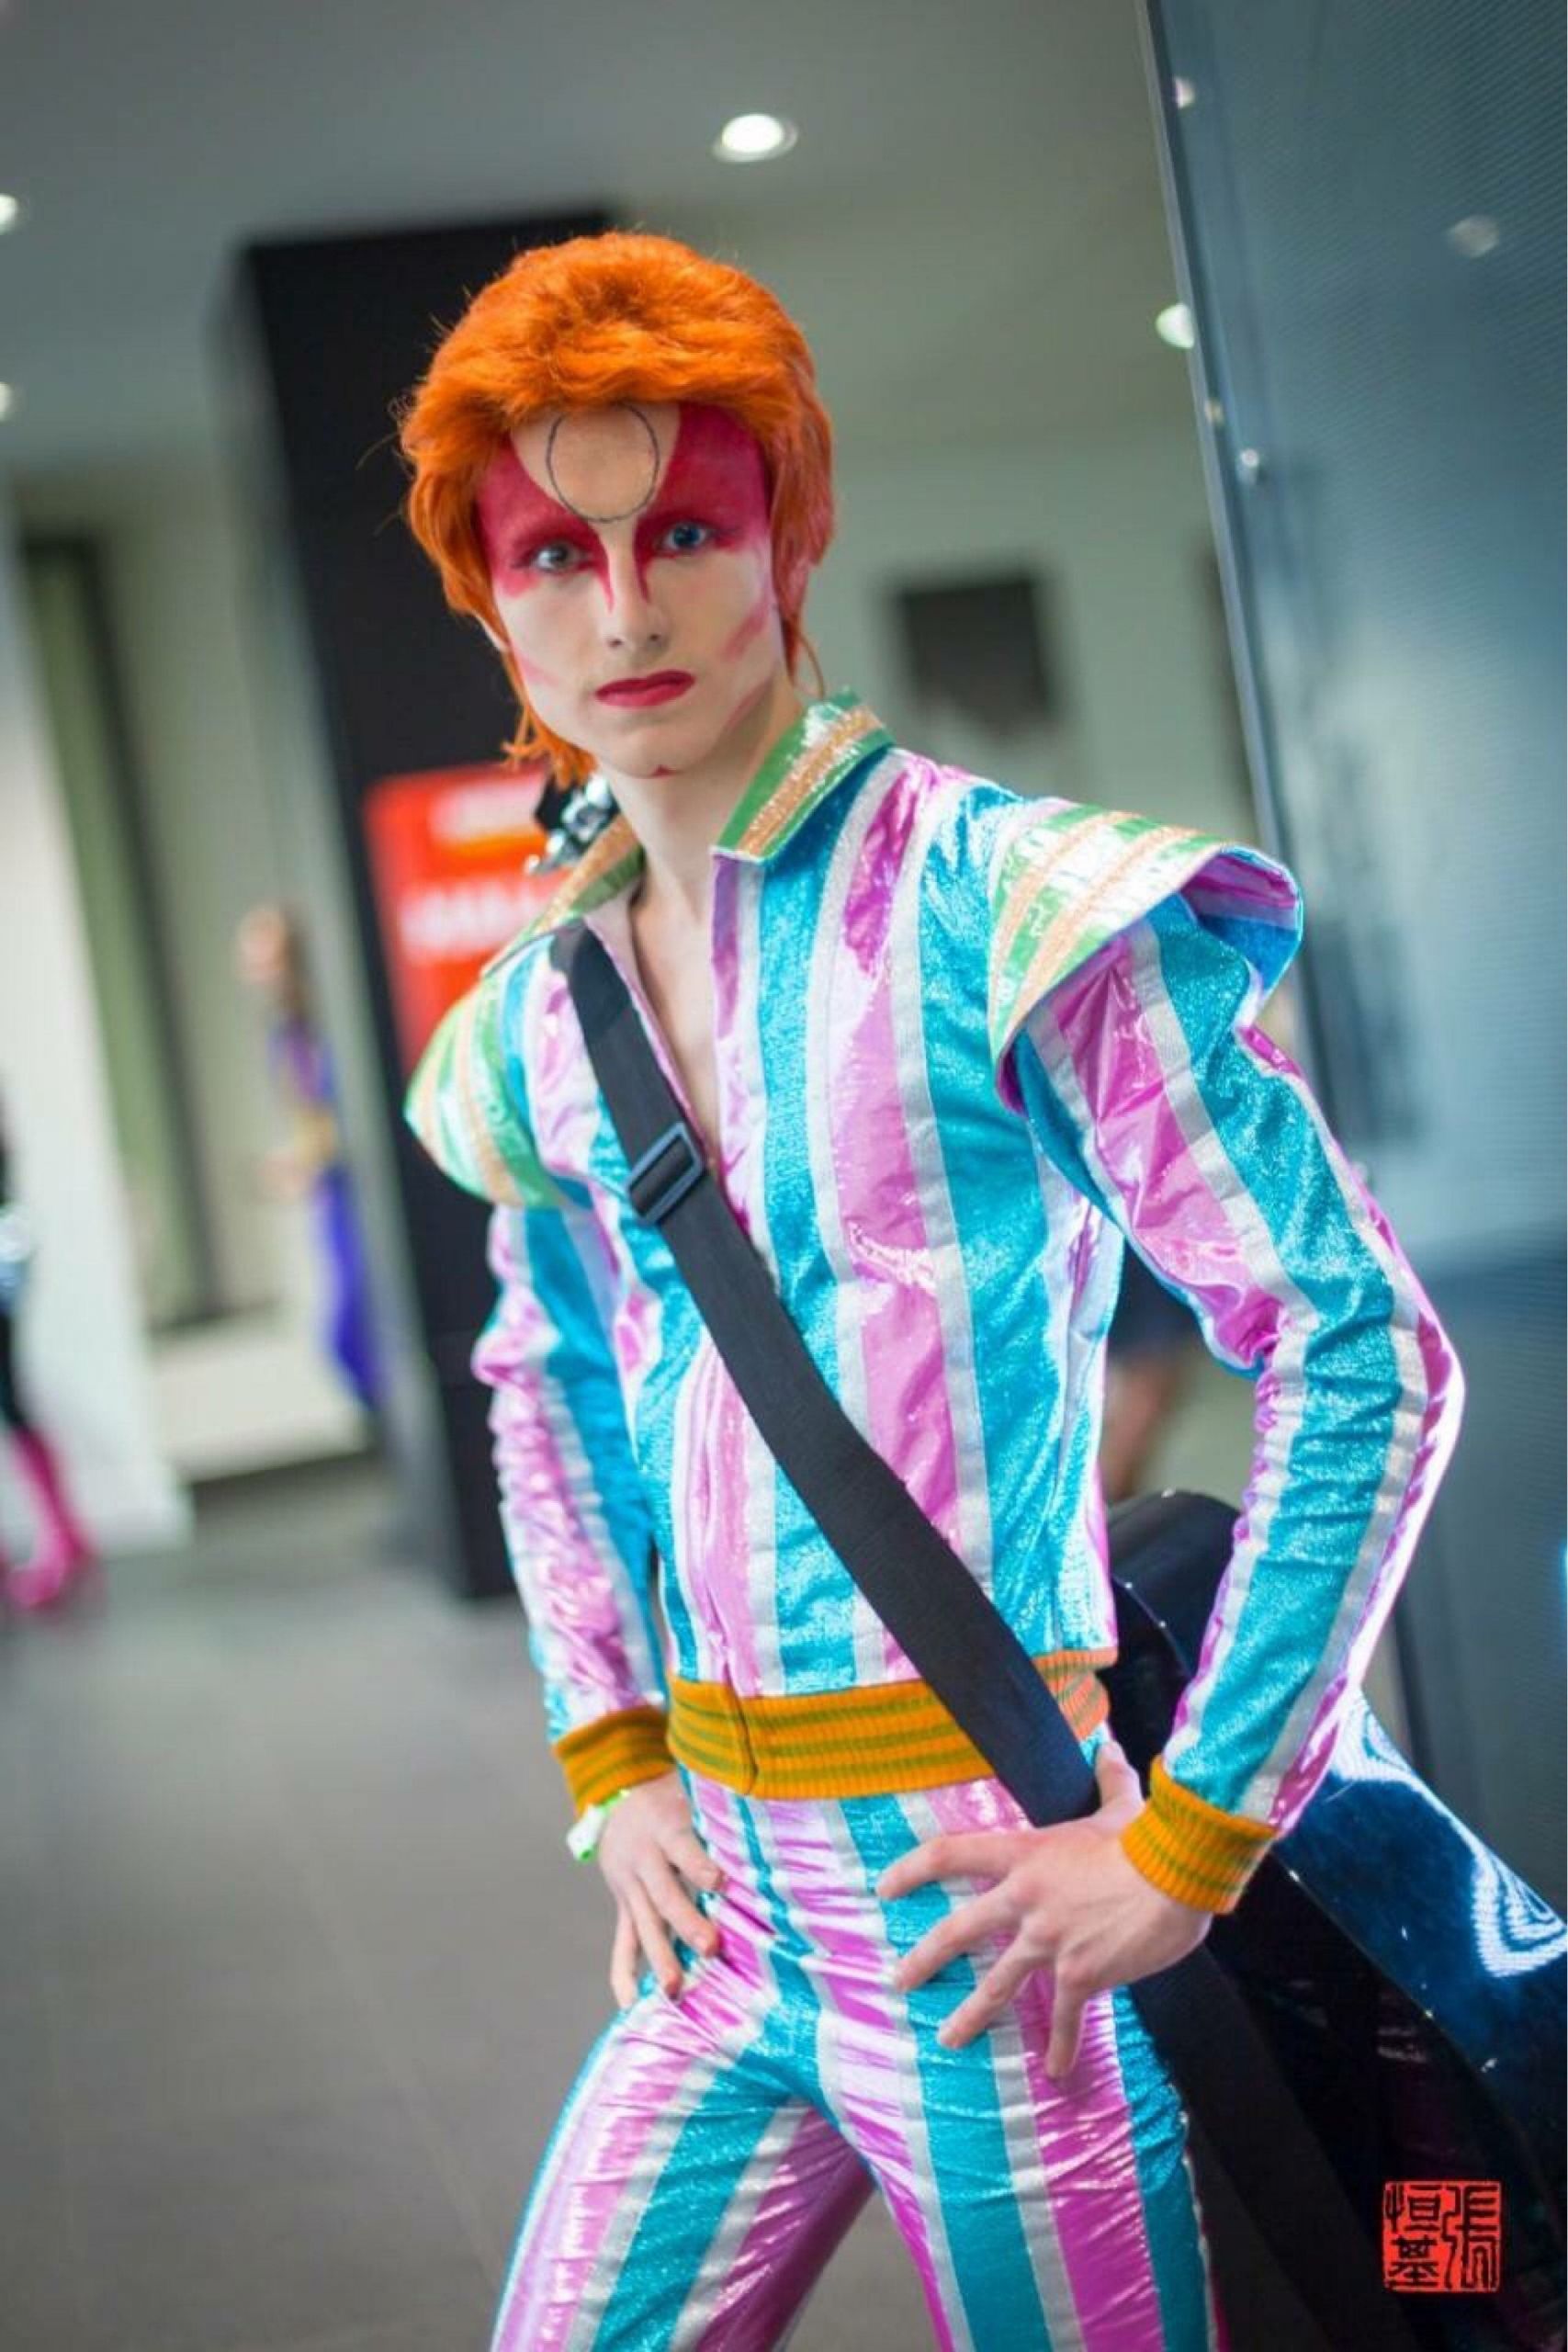 Ziggy Stardust Costume DIY
 Ziggy Stardust Inspired Cosplay Male Female Genderfluid